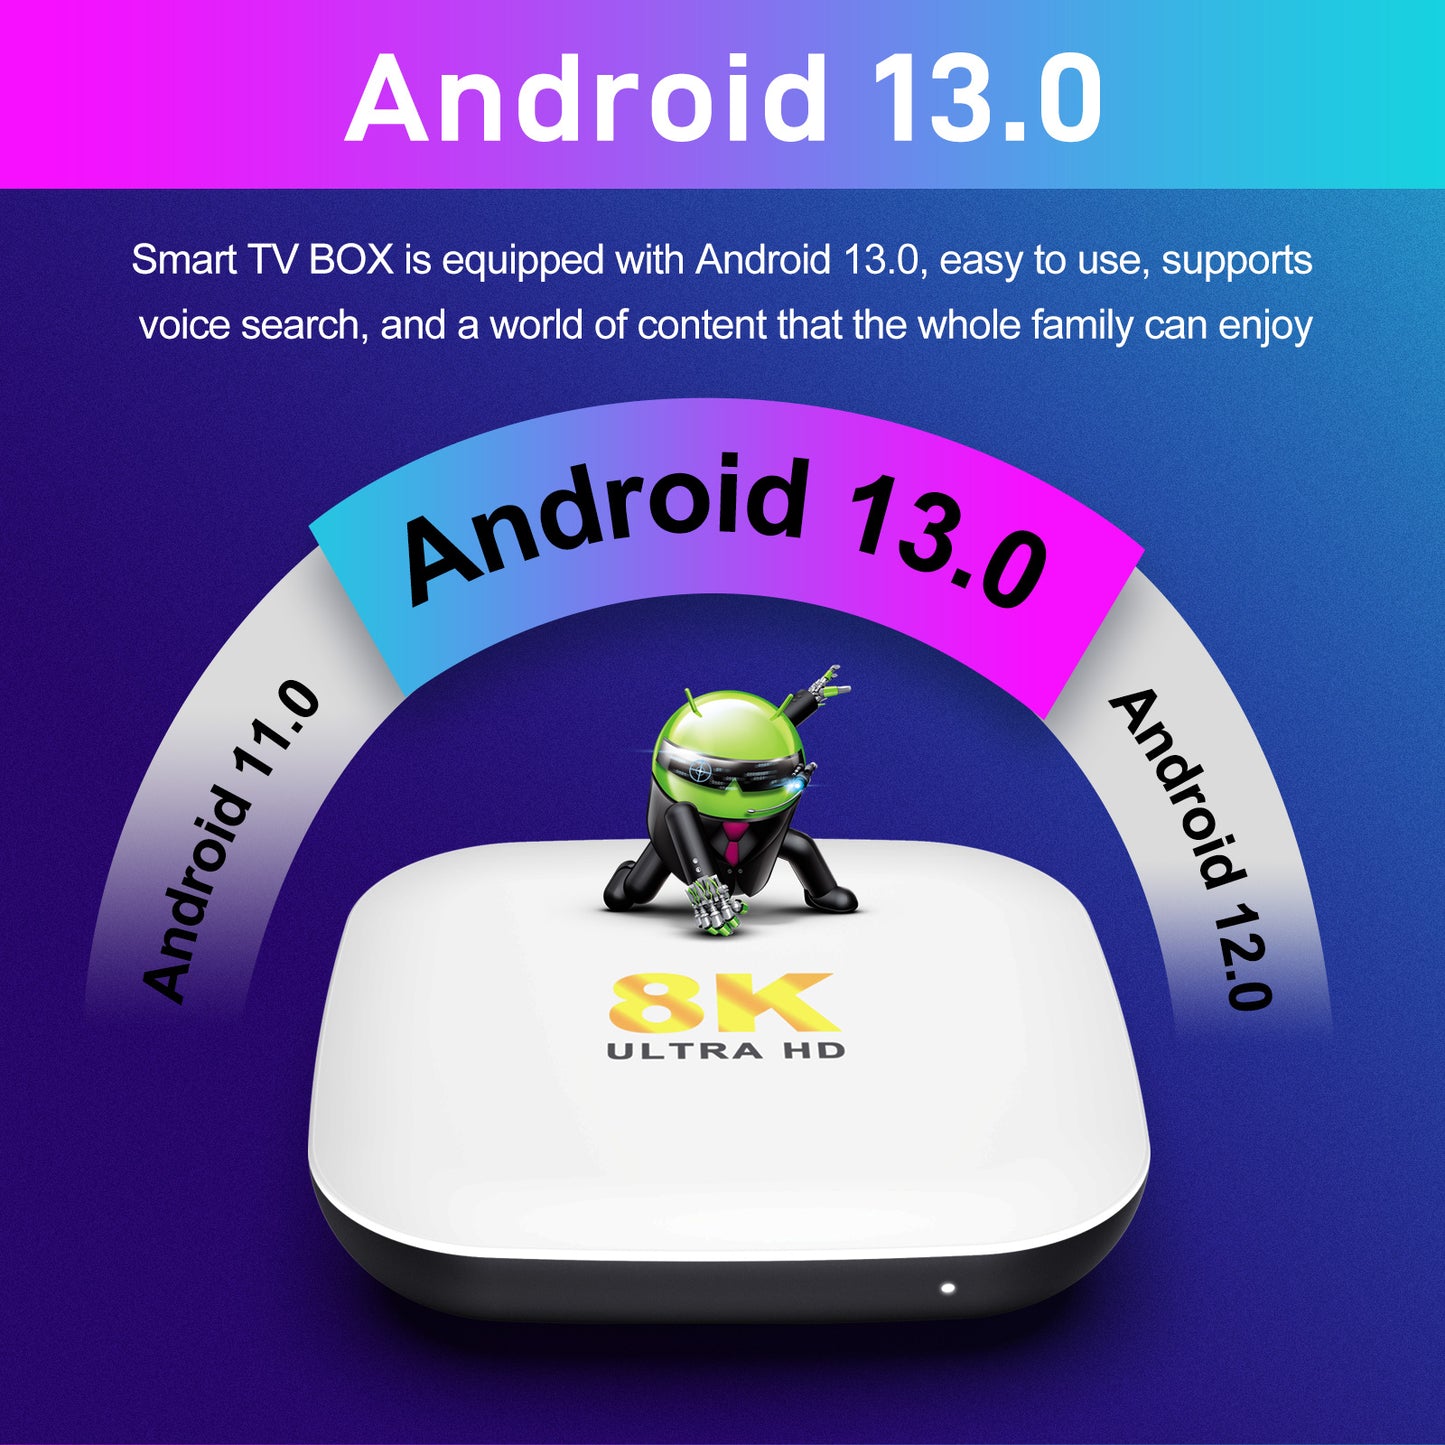 Android 13 TV Box H96 M2 Max 2GB RAM, 16GB ROM, RK3528 (Smart TV Console)